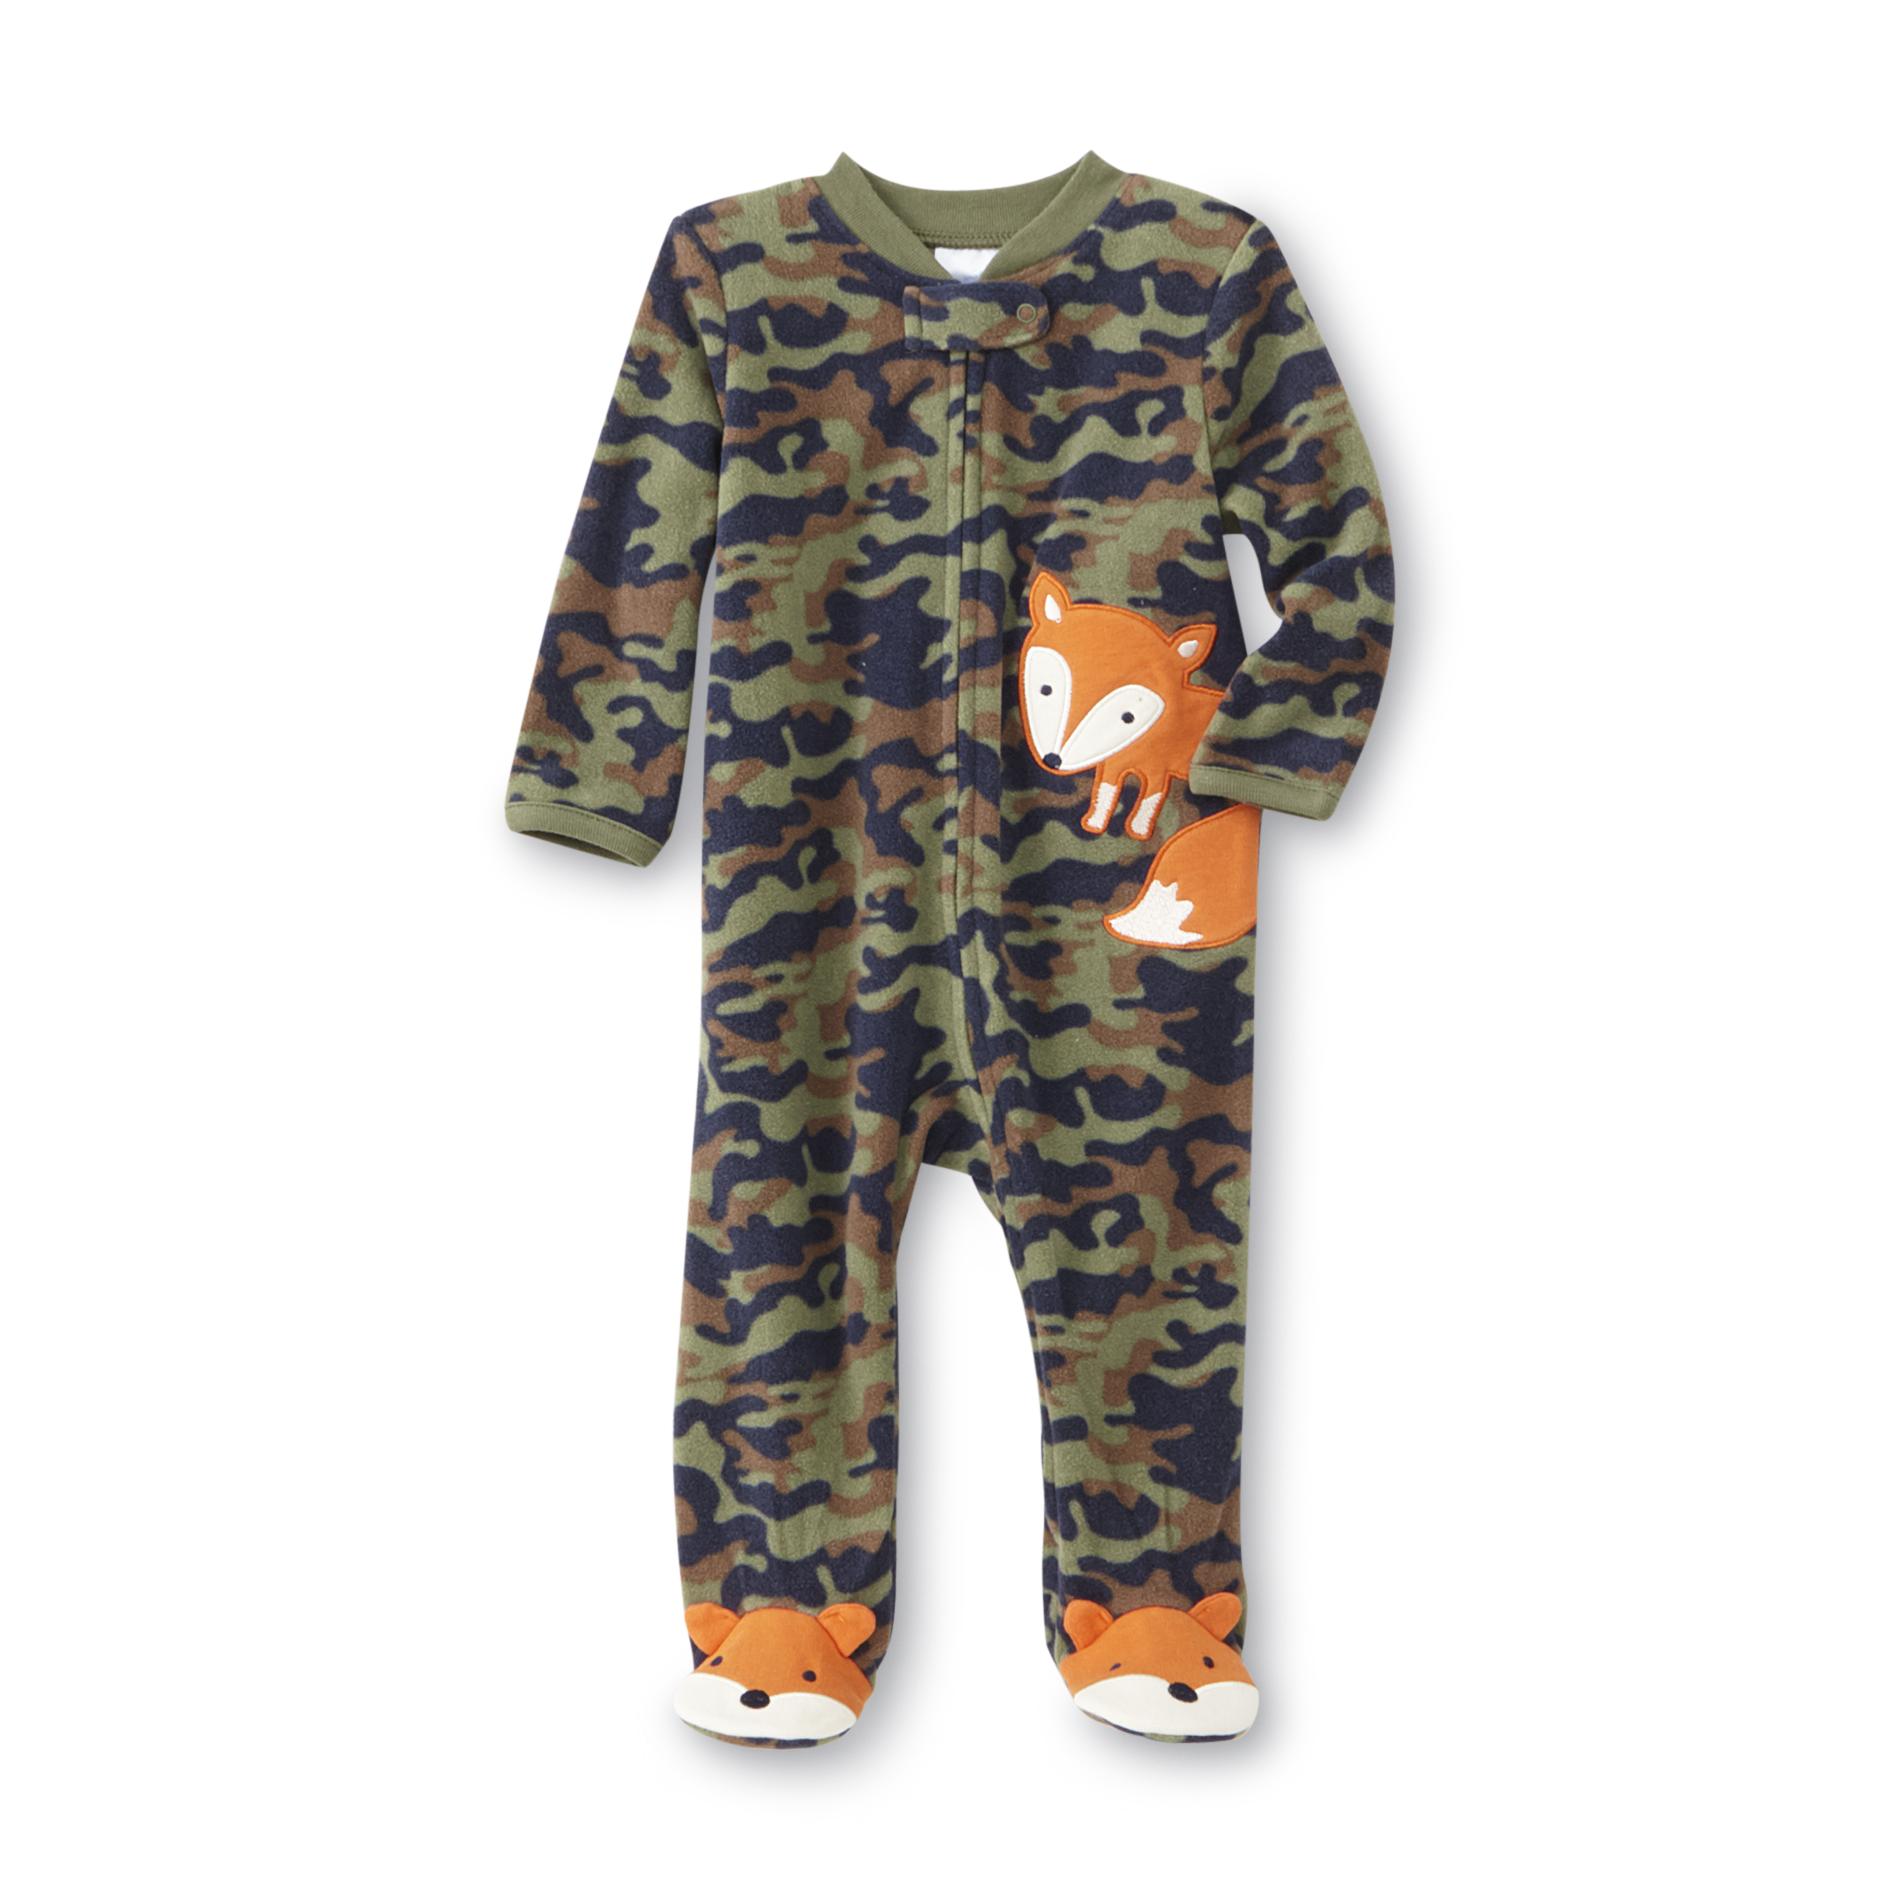 Newborn Boy's Footed Sleeper Pajamas - Camo Foxes